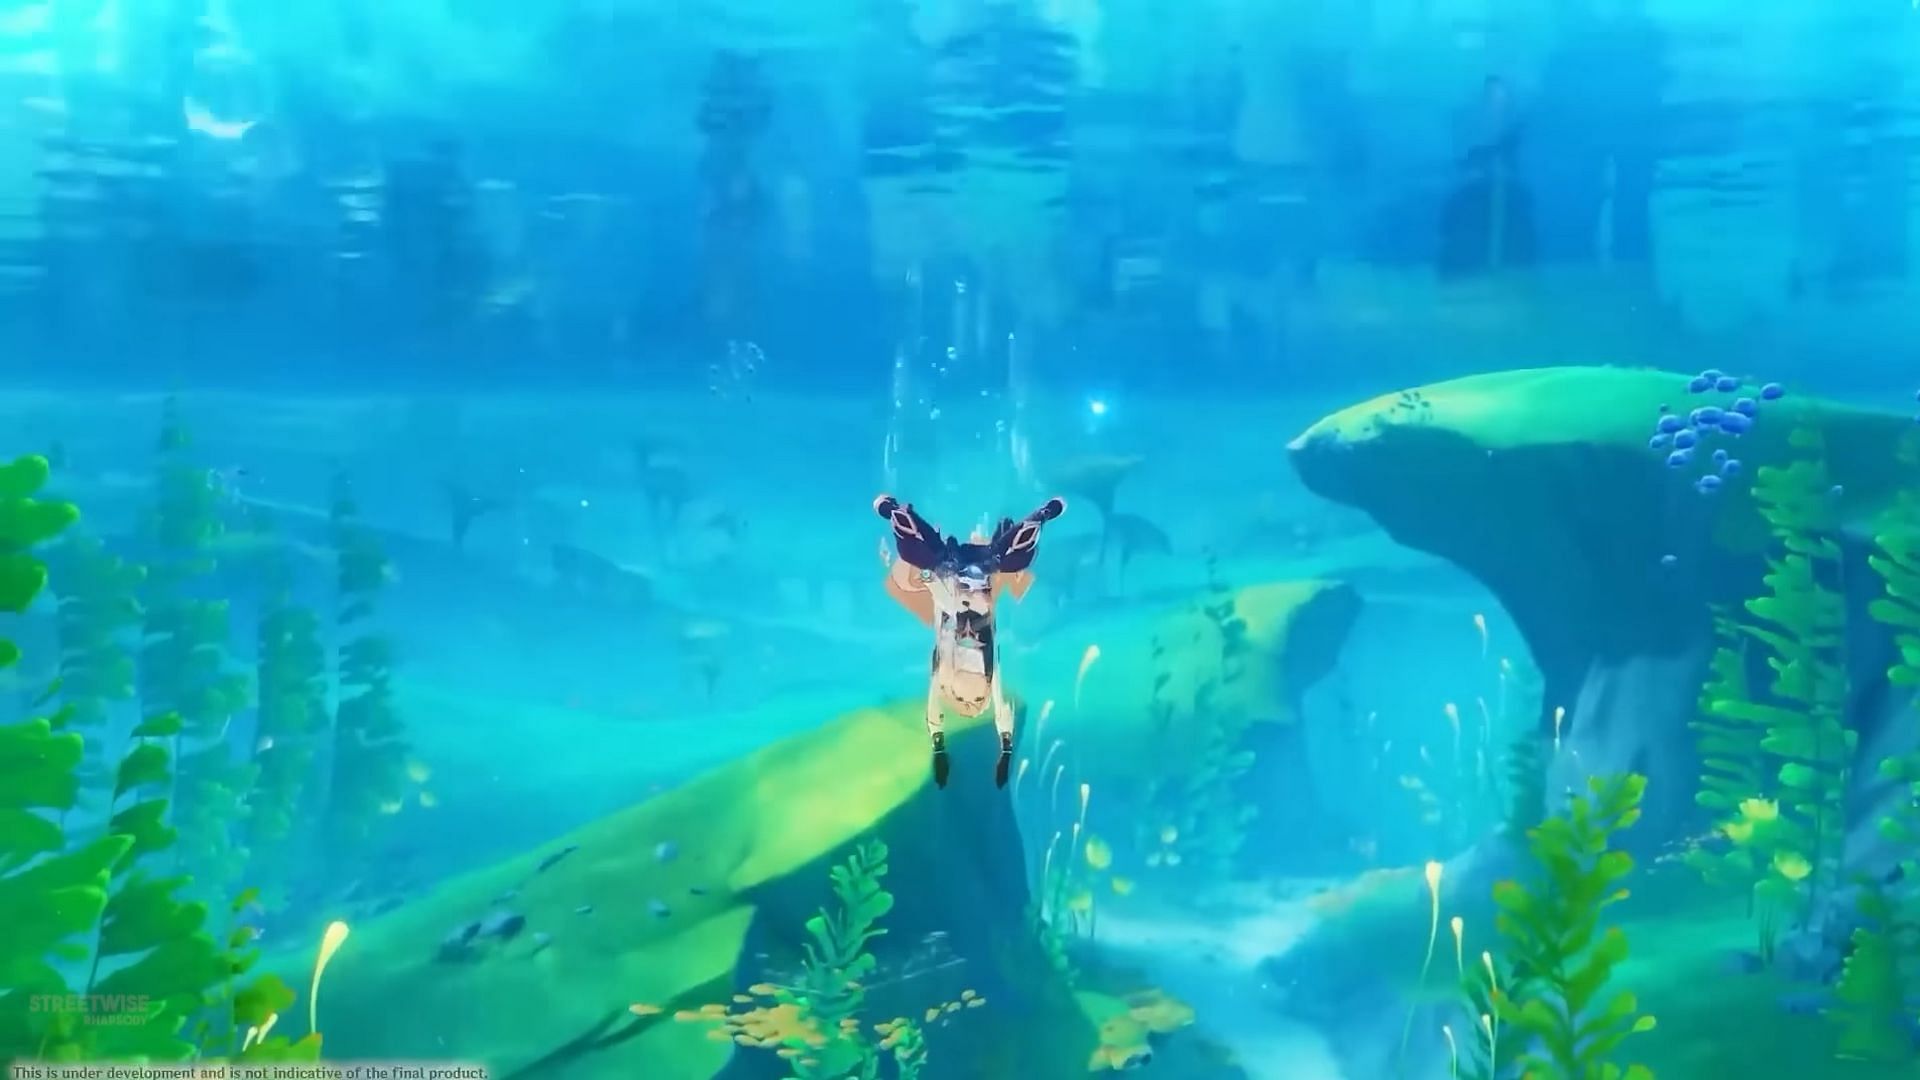 A screenshot of Aether diving underwater (Image via HoYoverse)